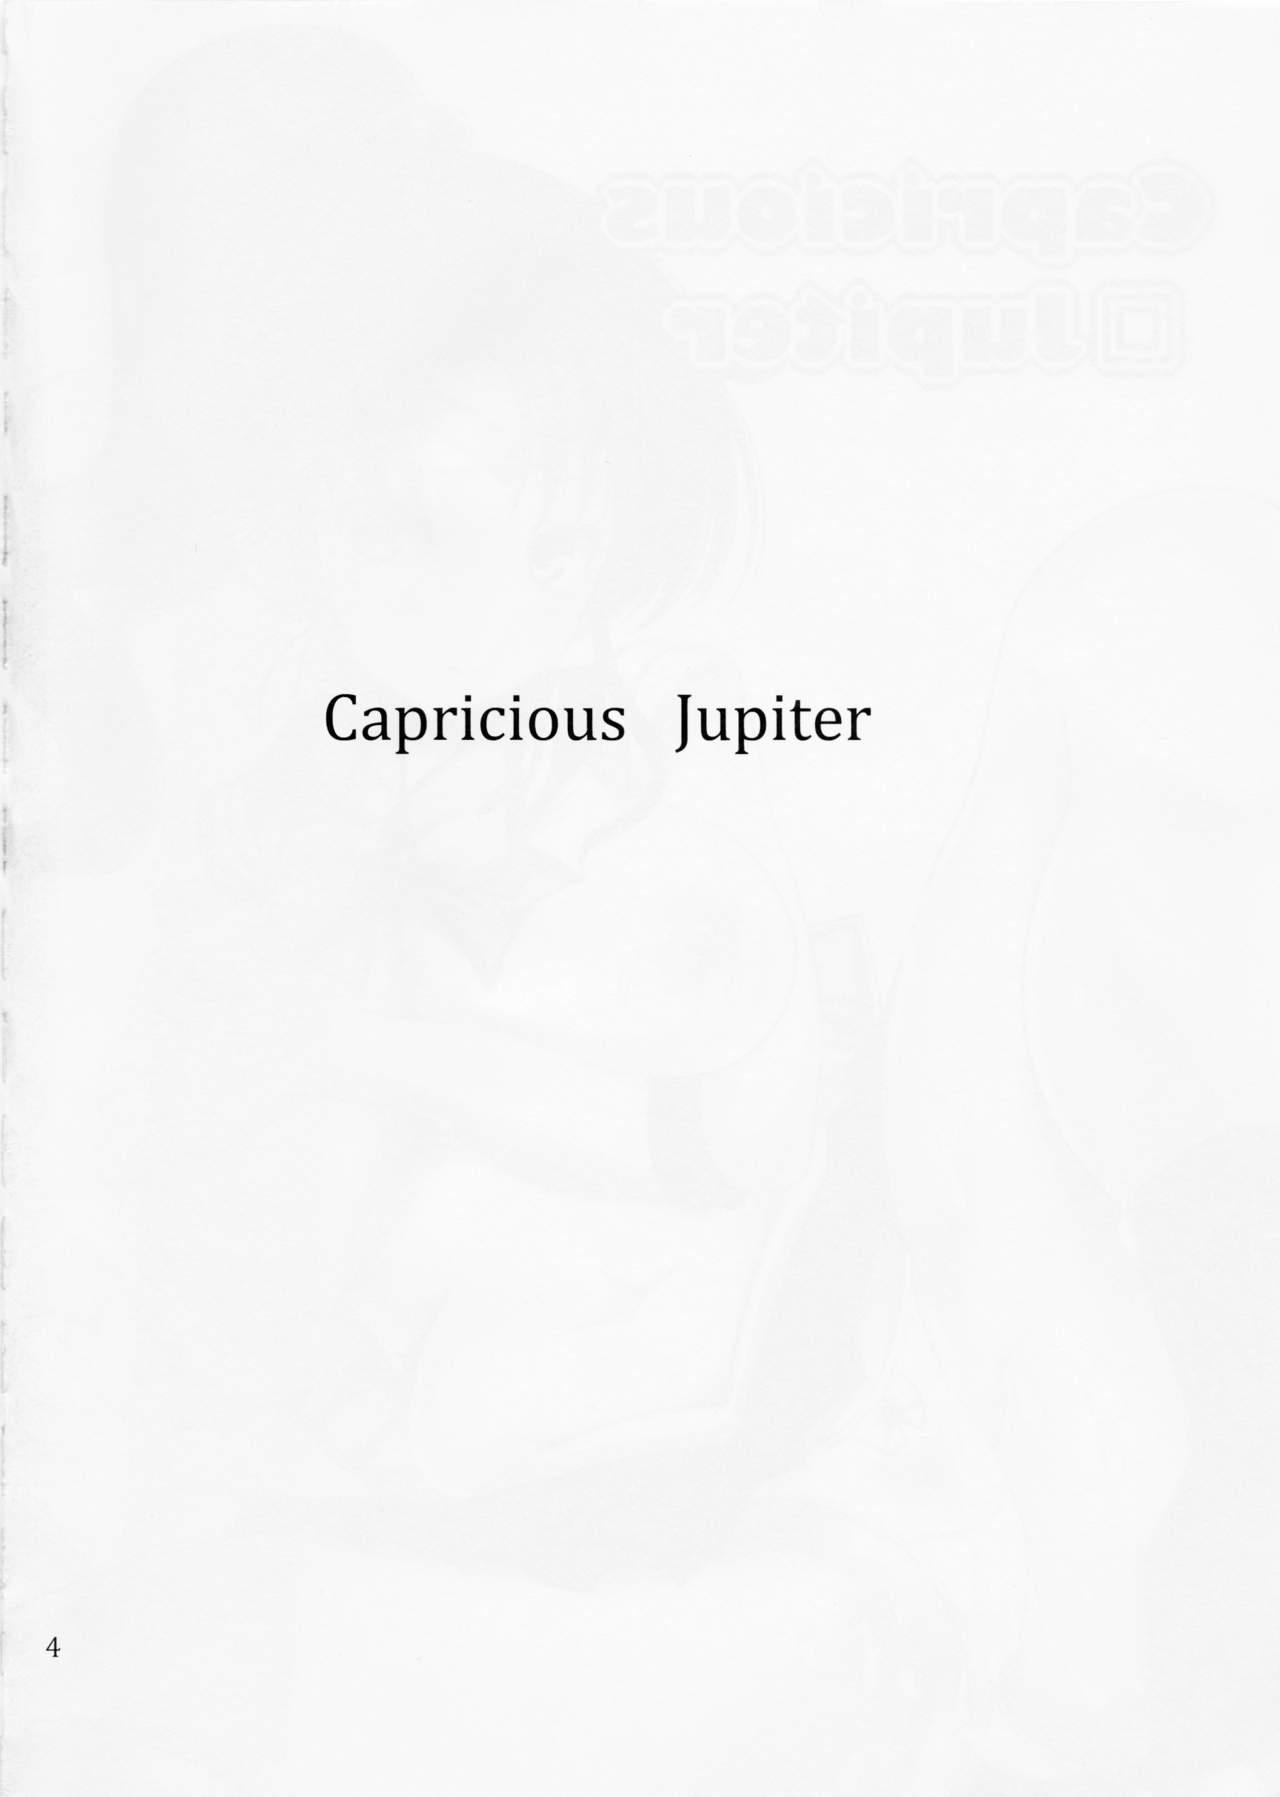 Kimagure Jupiter - Capricious Jupiter 2